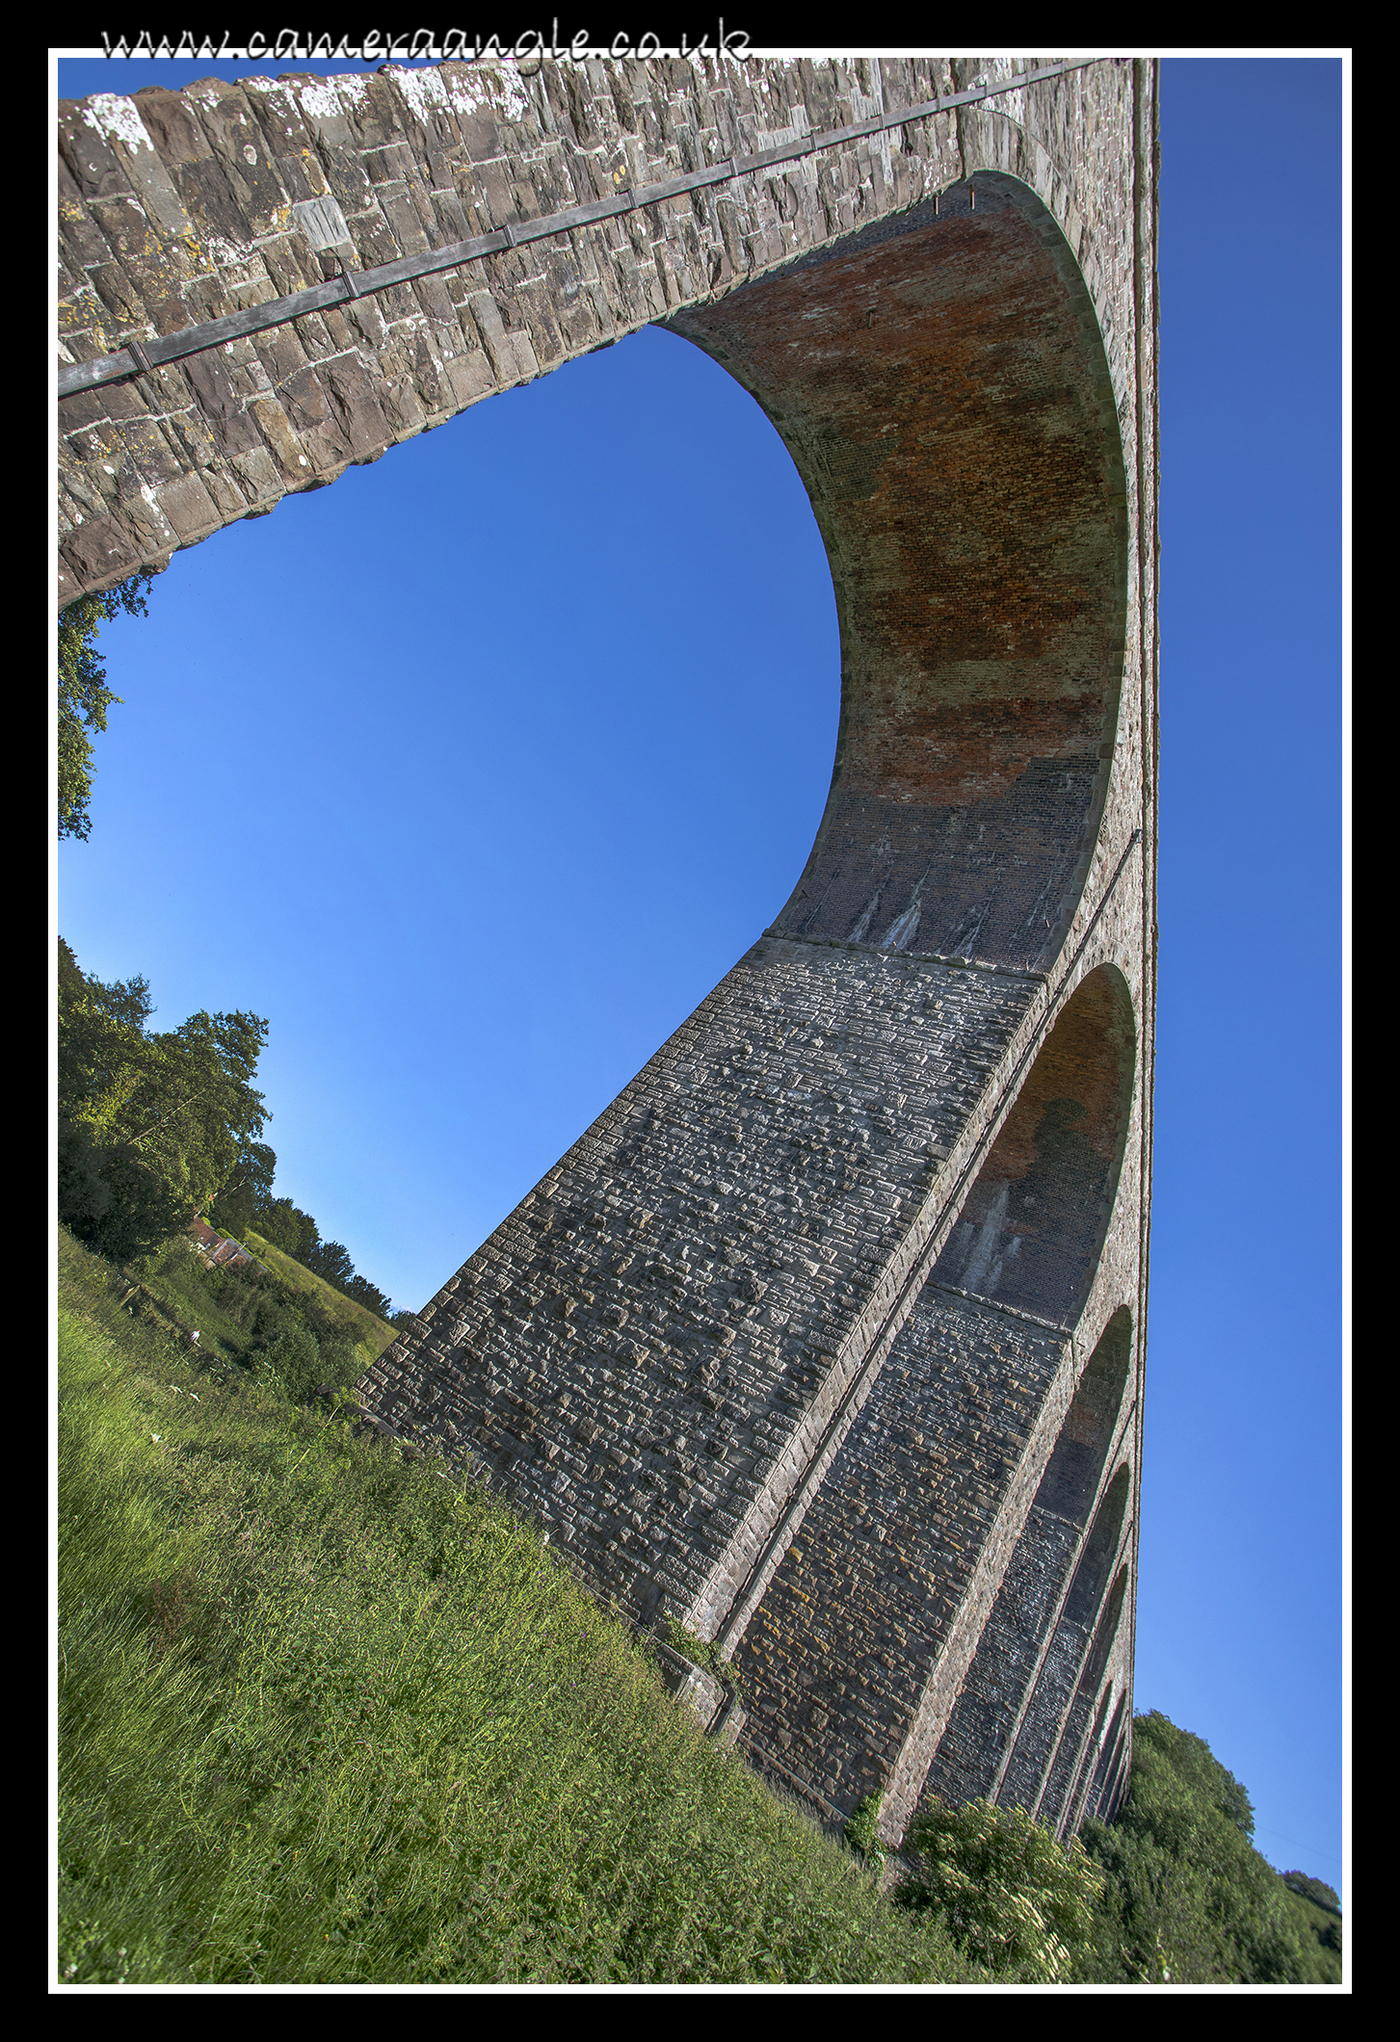 Pensford Viaduct
Keywords: Mendips Tour Pensford Viaduct